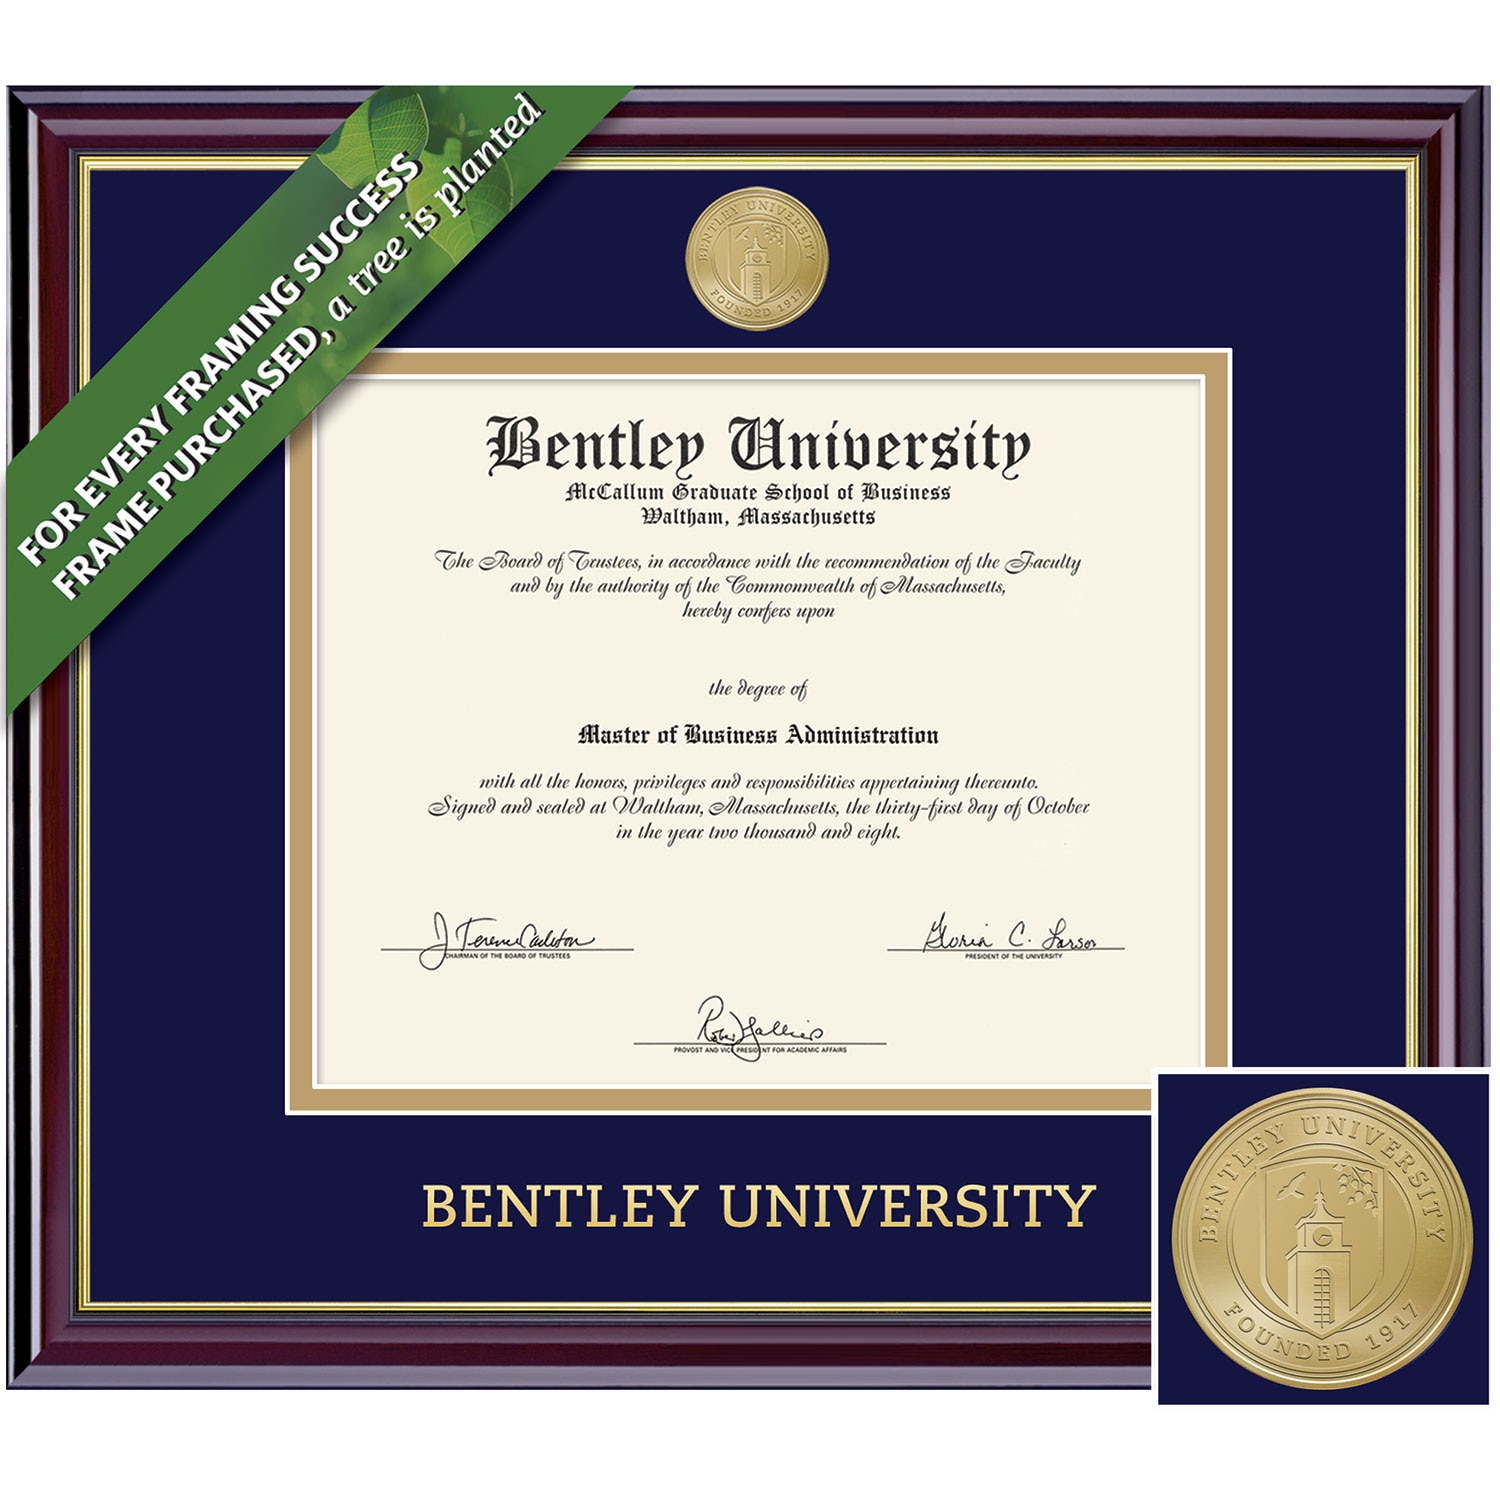 Framing Success 11 x 14 Windsor Gold Medallion Bachelors, Masters, PhD Diploma Frame